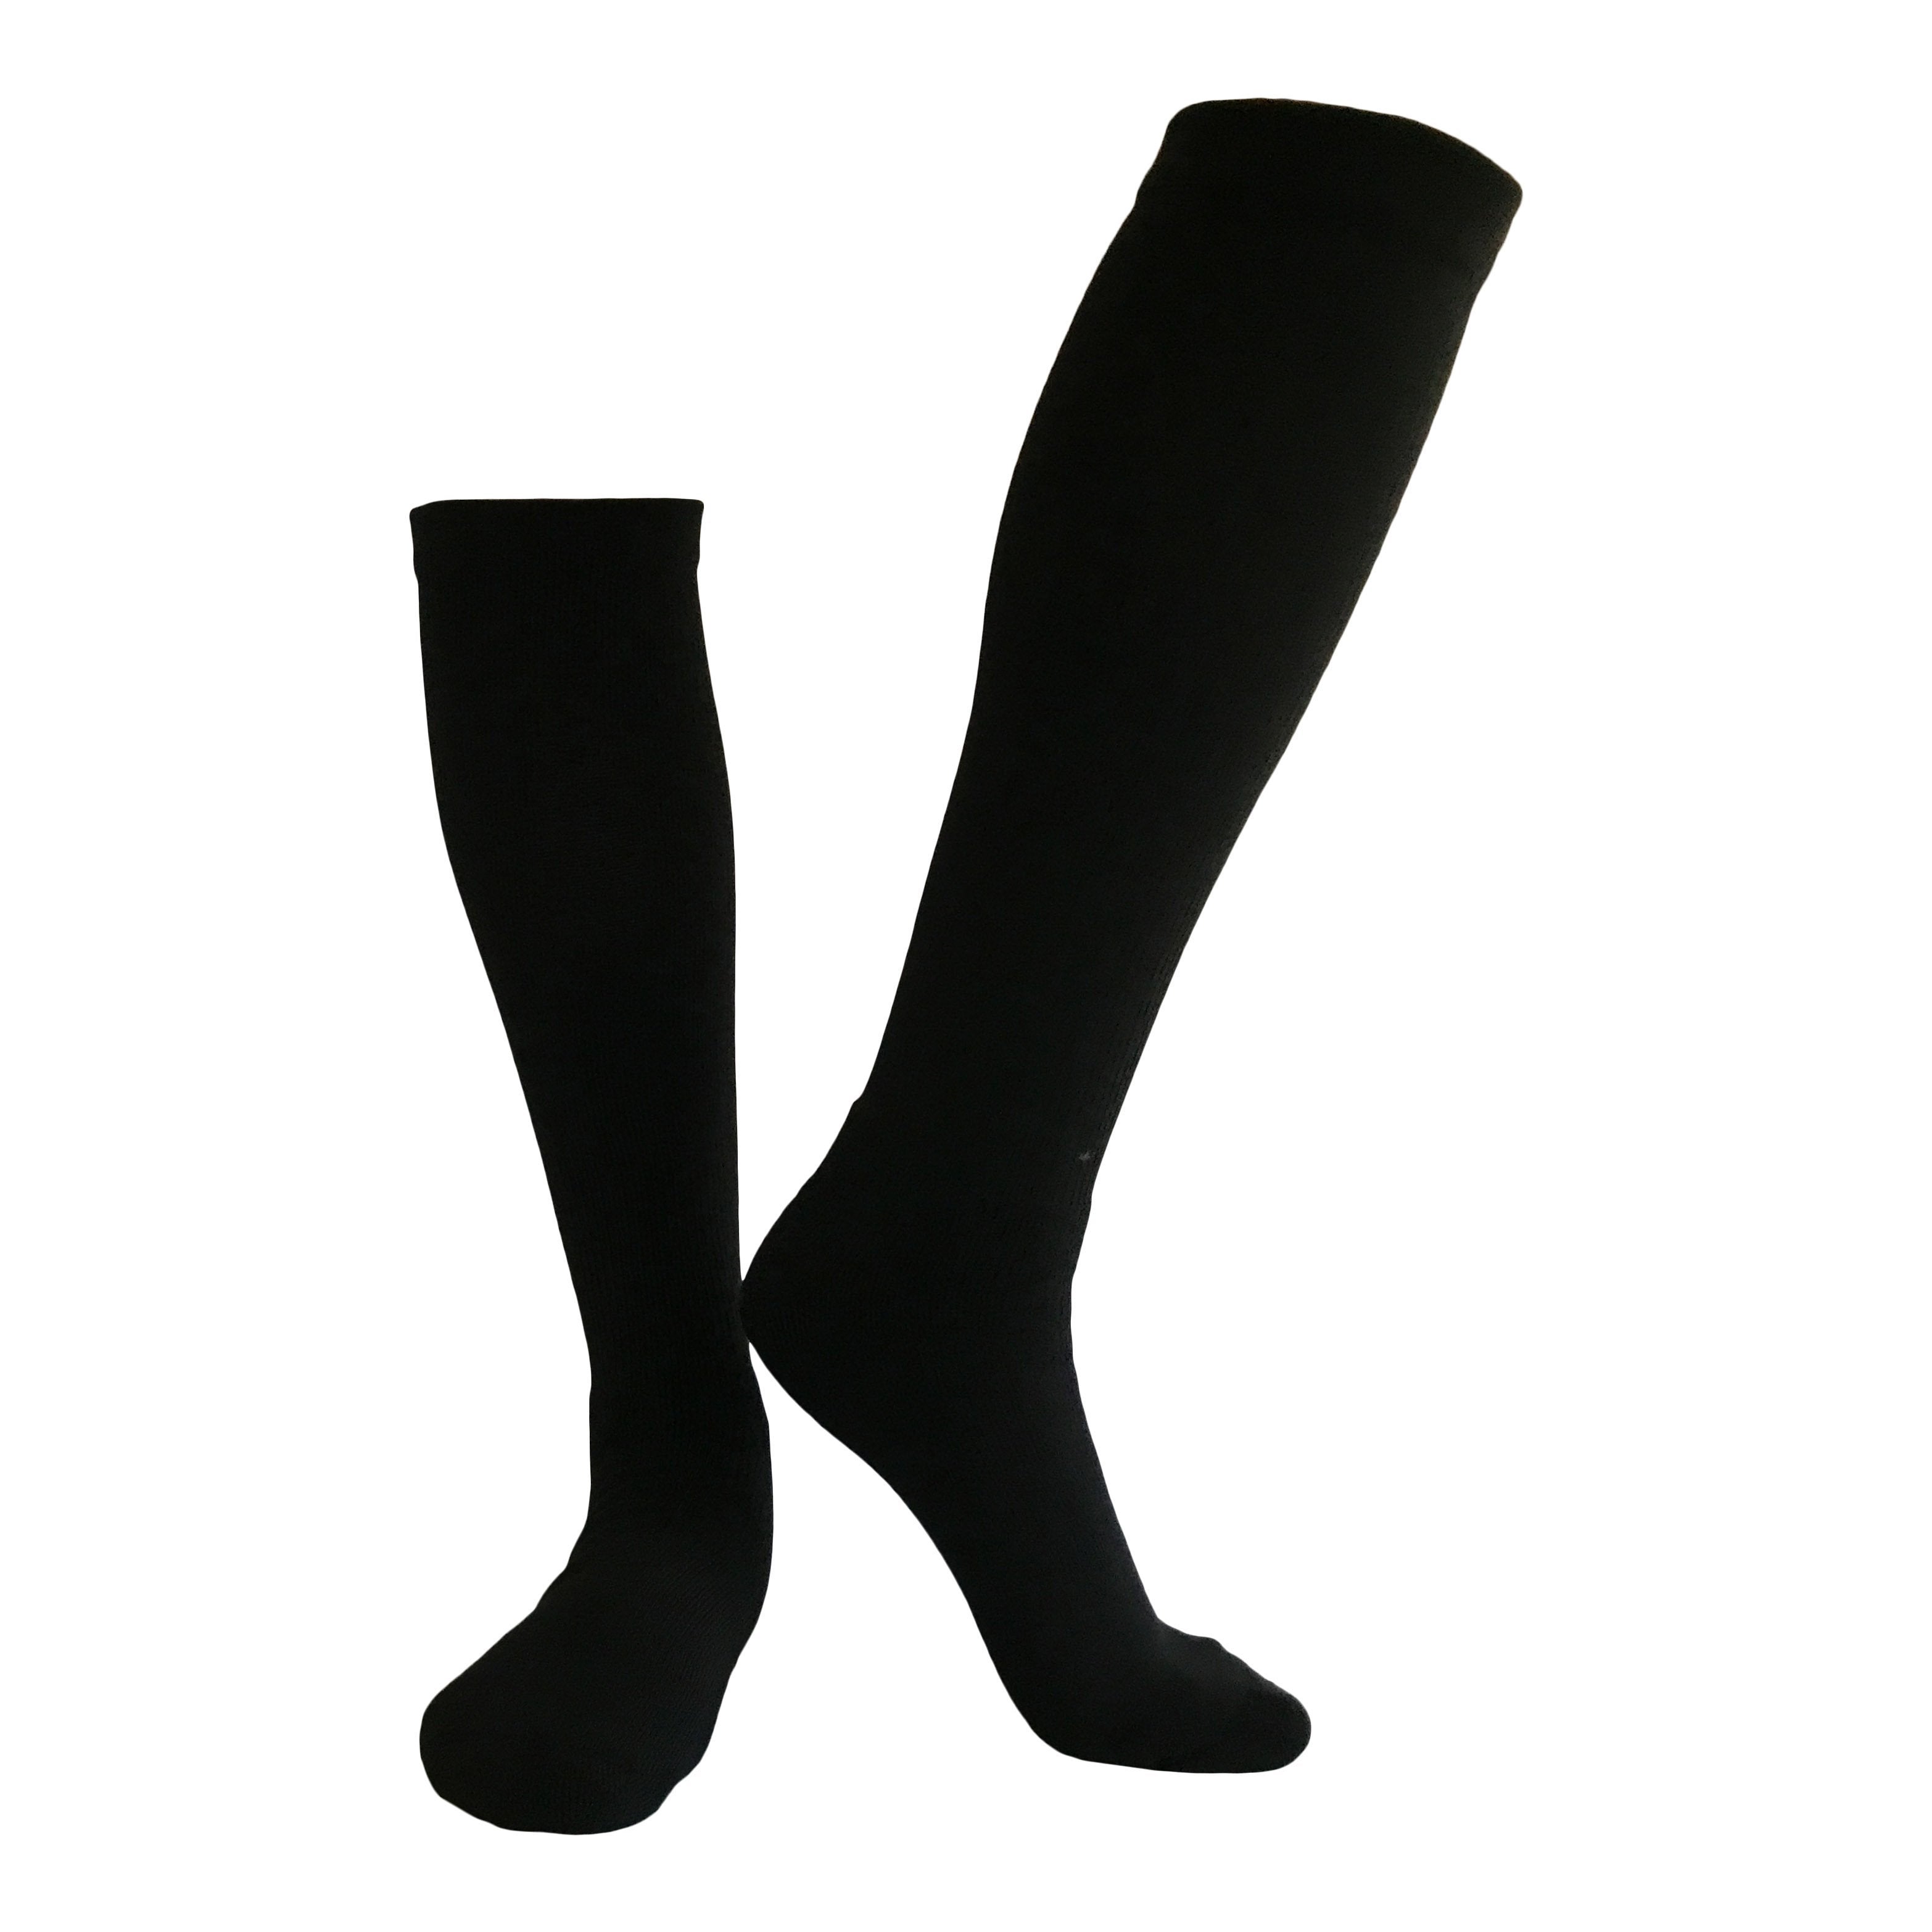 Compression Socks (20-30 mmHg) - Black